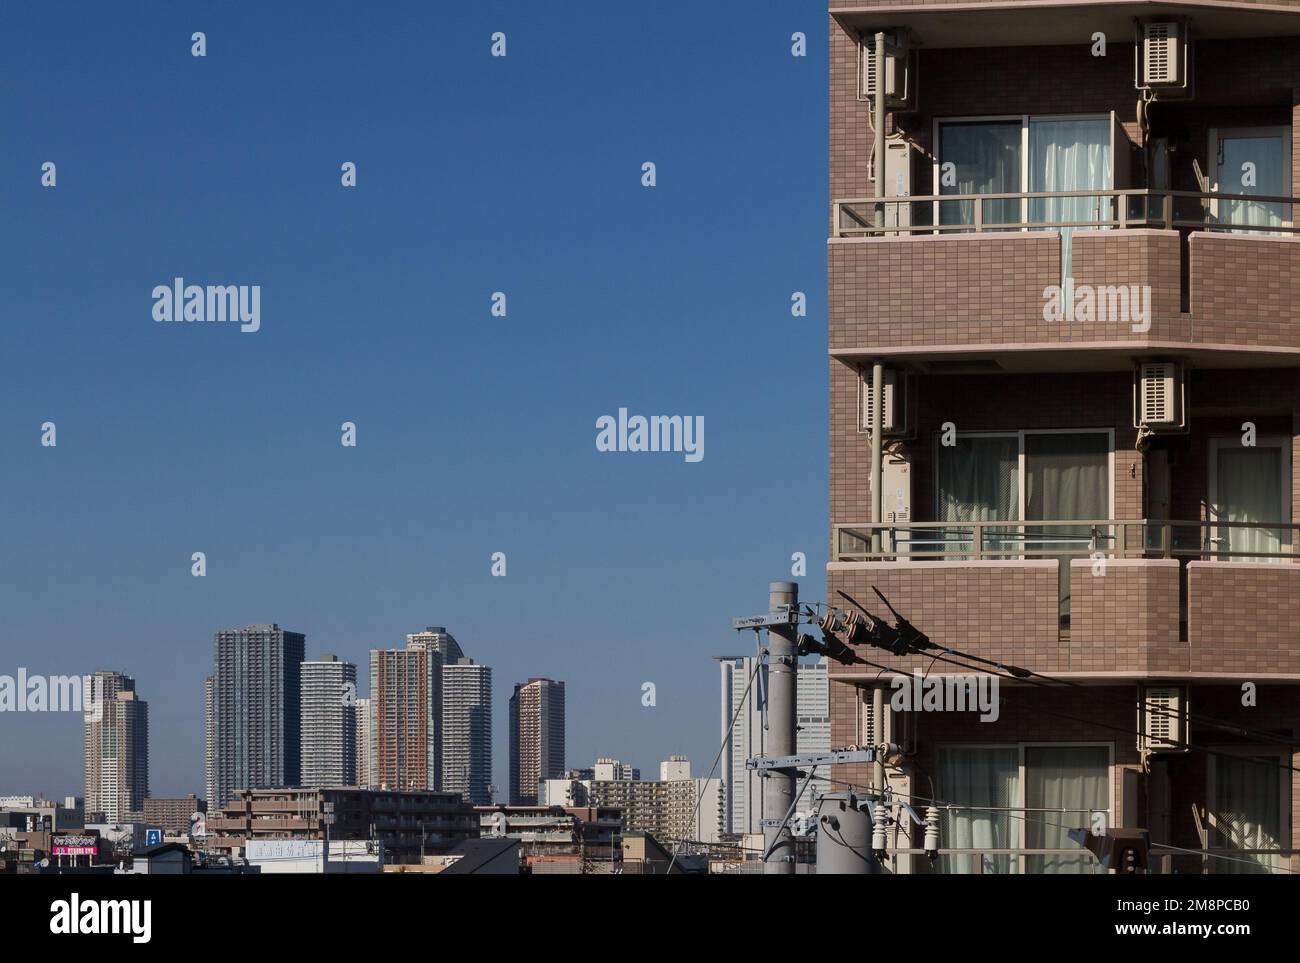 The skyscrapers of Musashi Kosugi seen behind an apartment building in Kashimada, Kawasaki, Kanagawa, Japan. Stock Photo